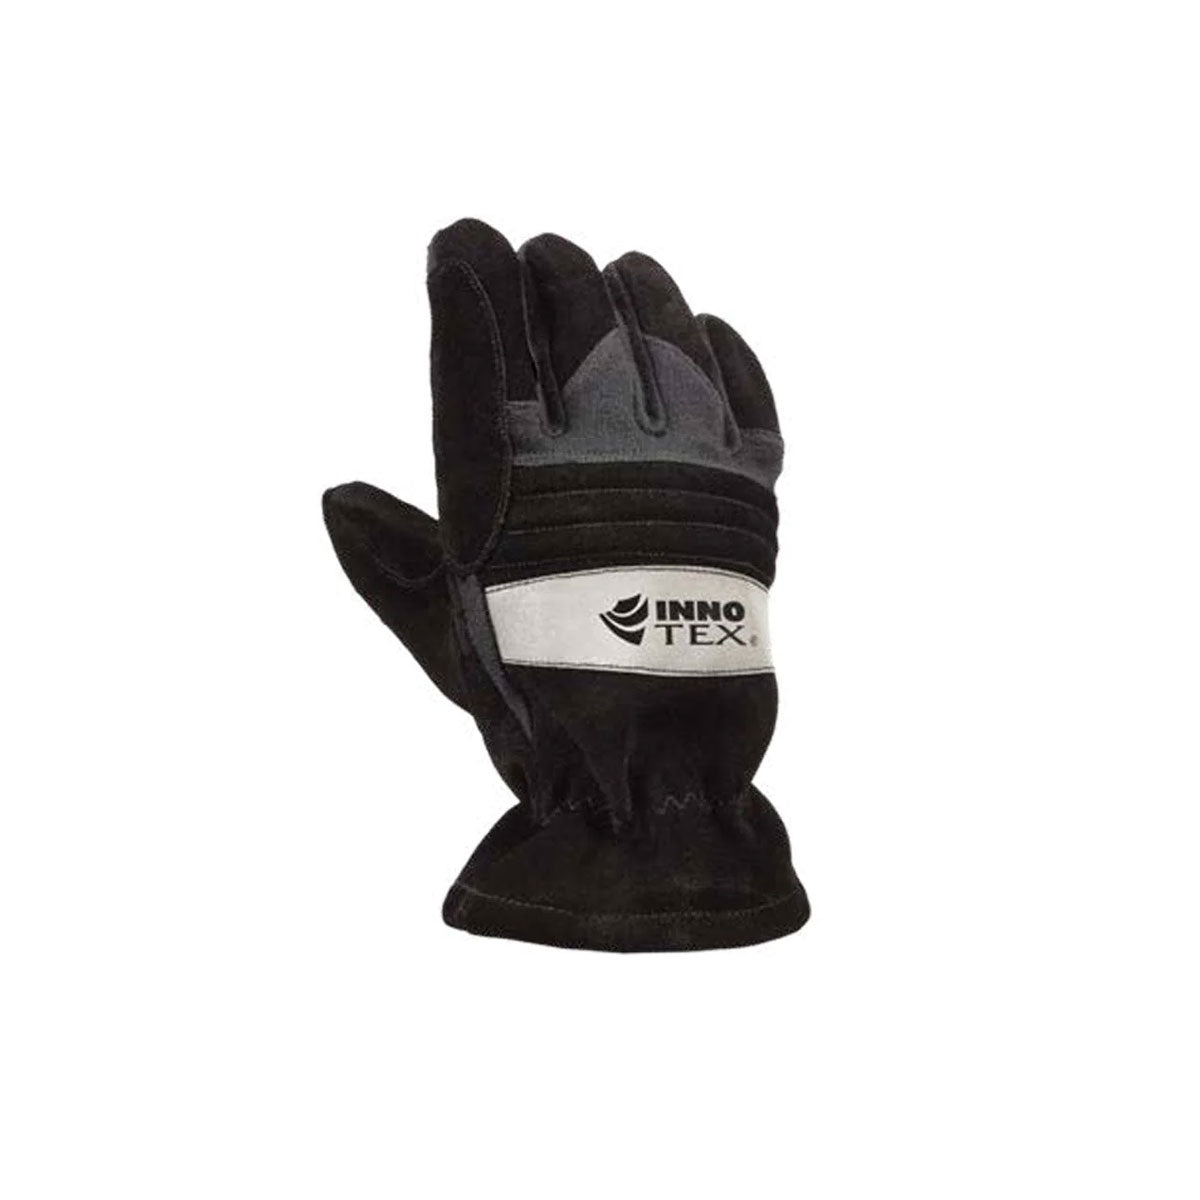 Glove Firefighting Vestamax Black Eversoft Split Cowhide Shell and Kevlar Knit Knuckle Padding Nomex Gauntlet Size Small